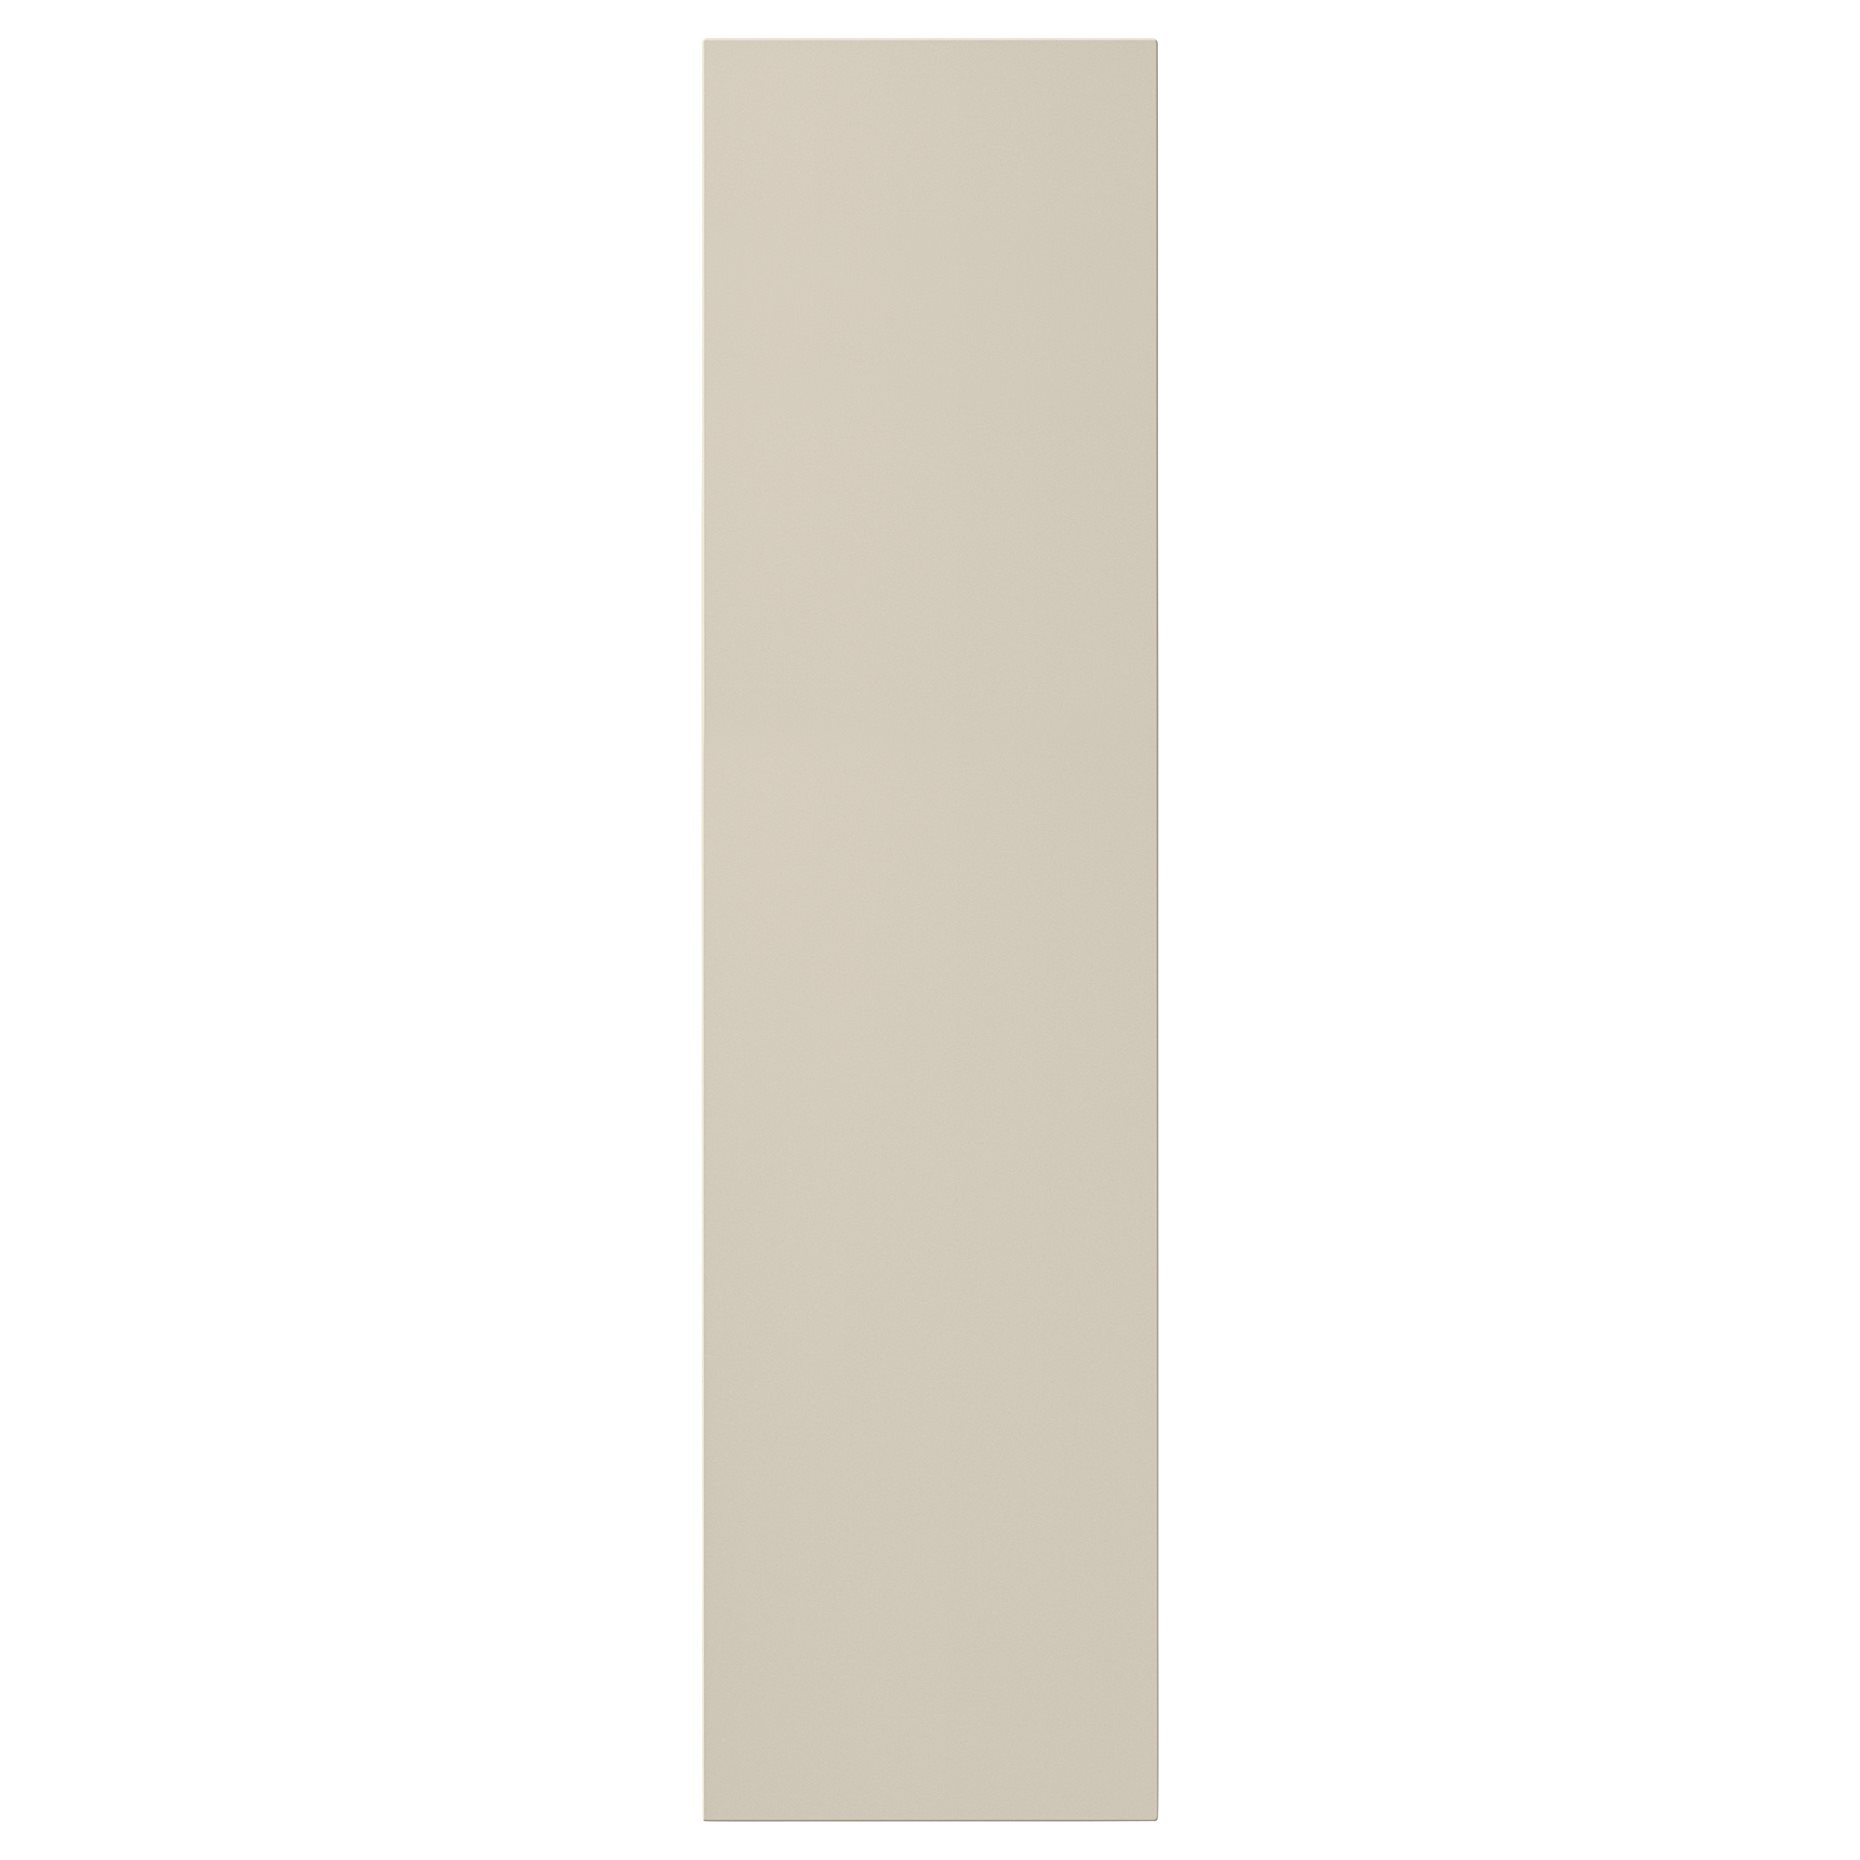 HAVSTORP, πλαϊνή επιφάνεια, 62x240 cm, 904.752.54